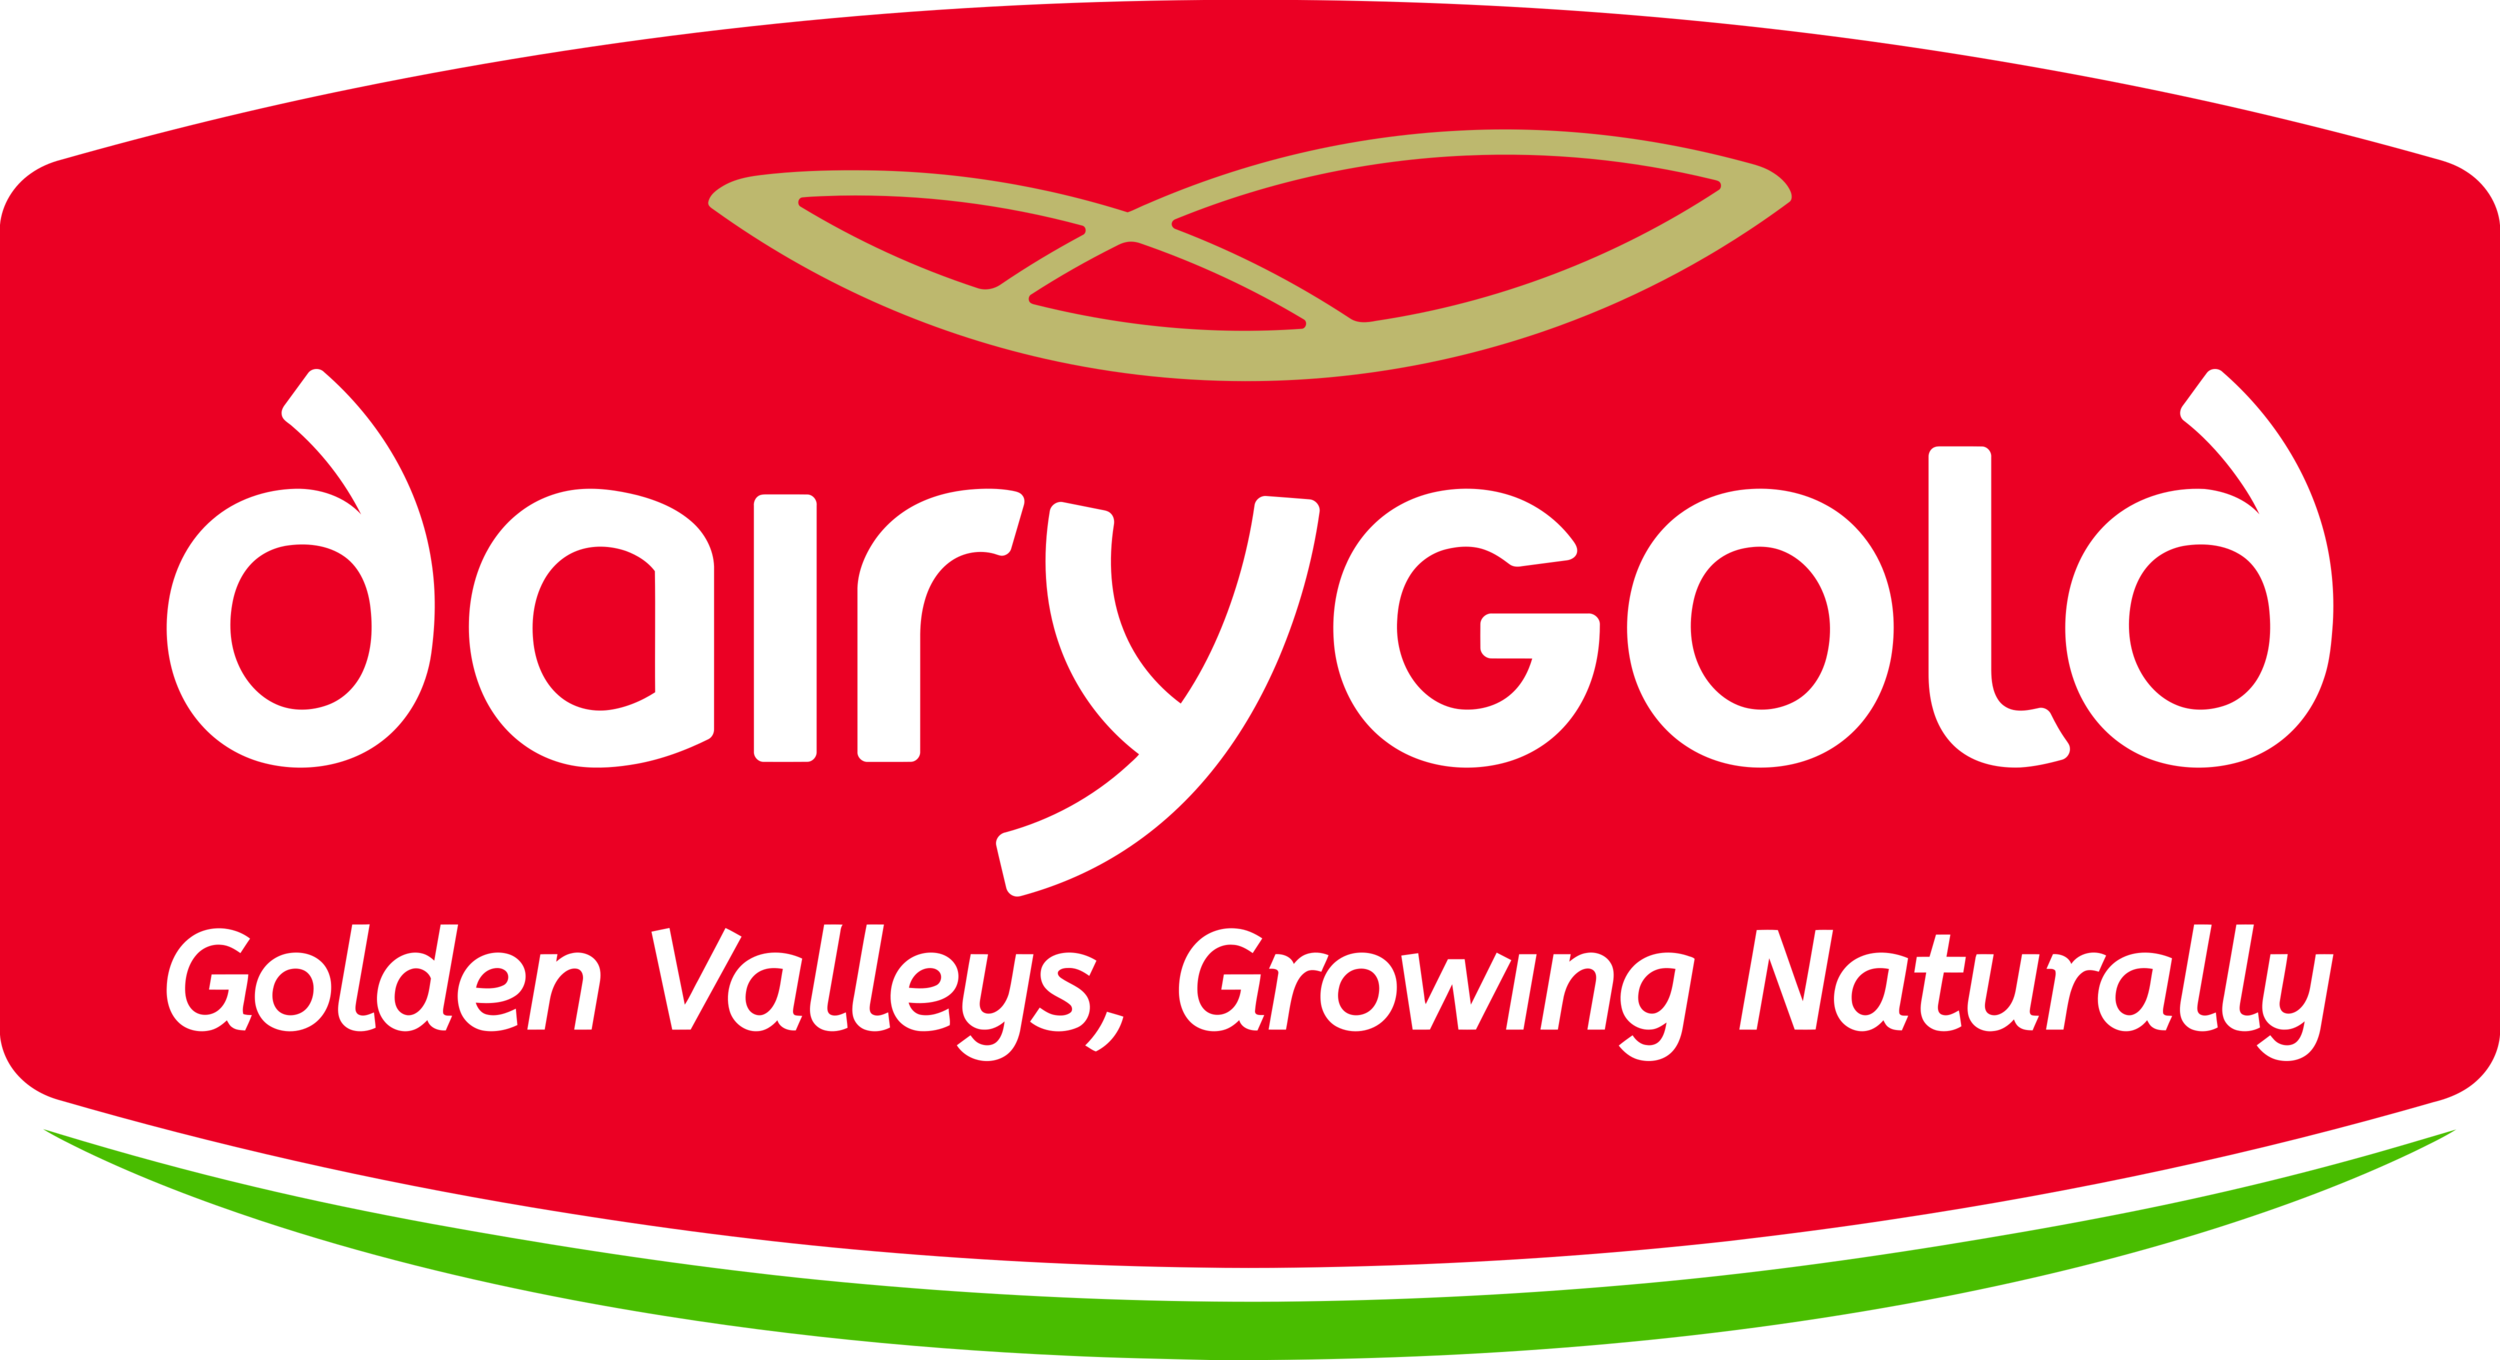 Dairygold_Logo.png